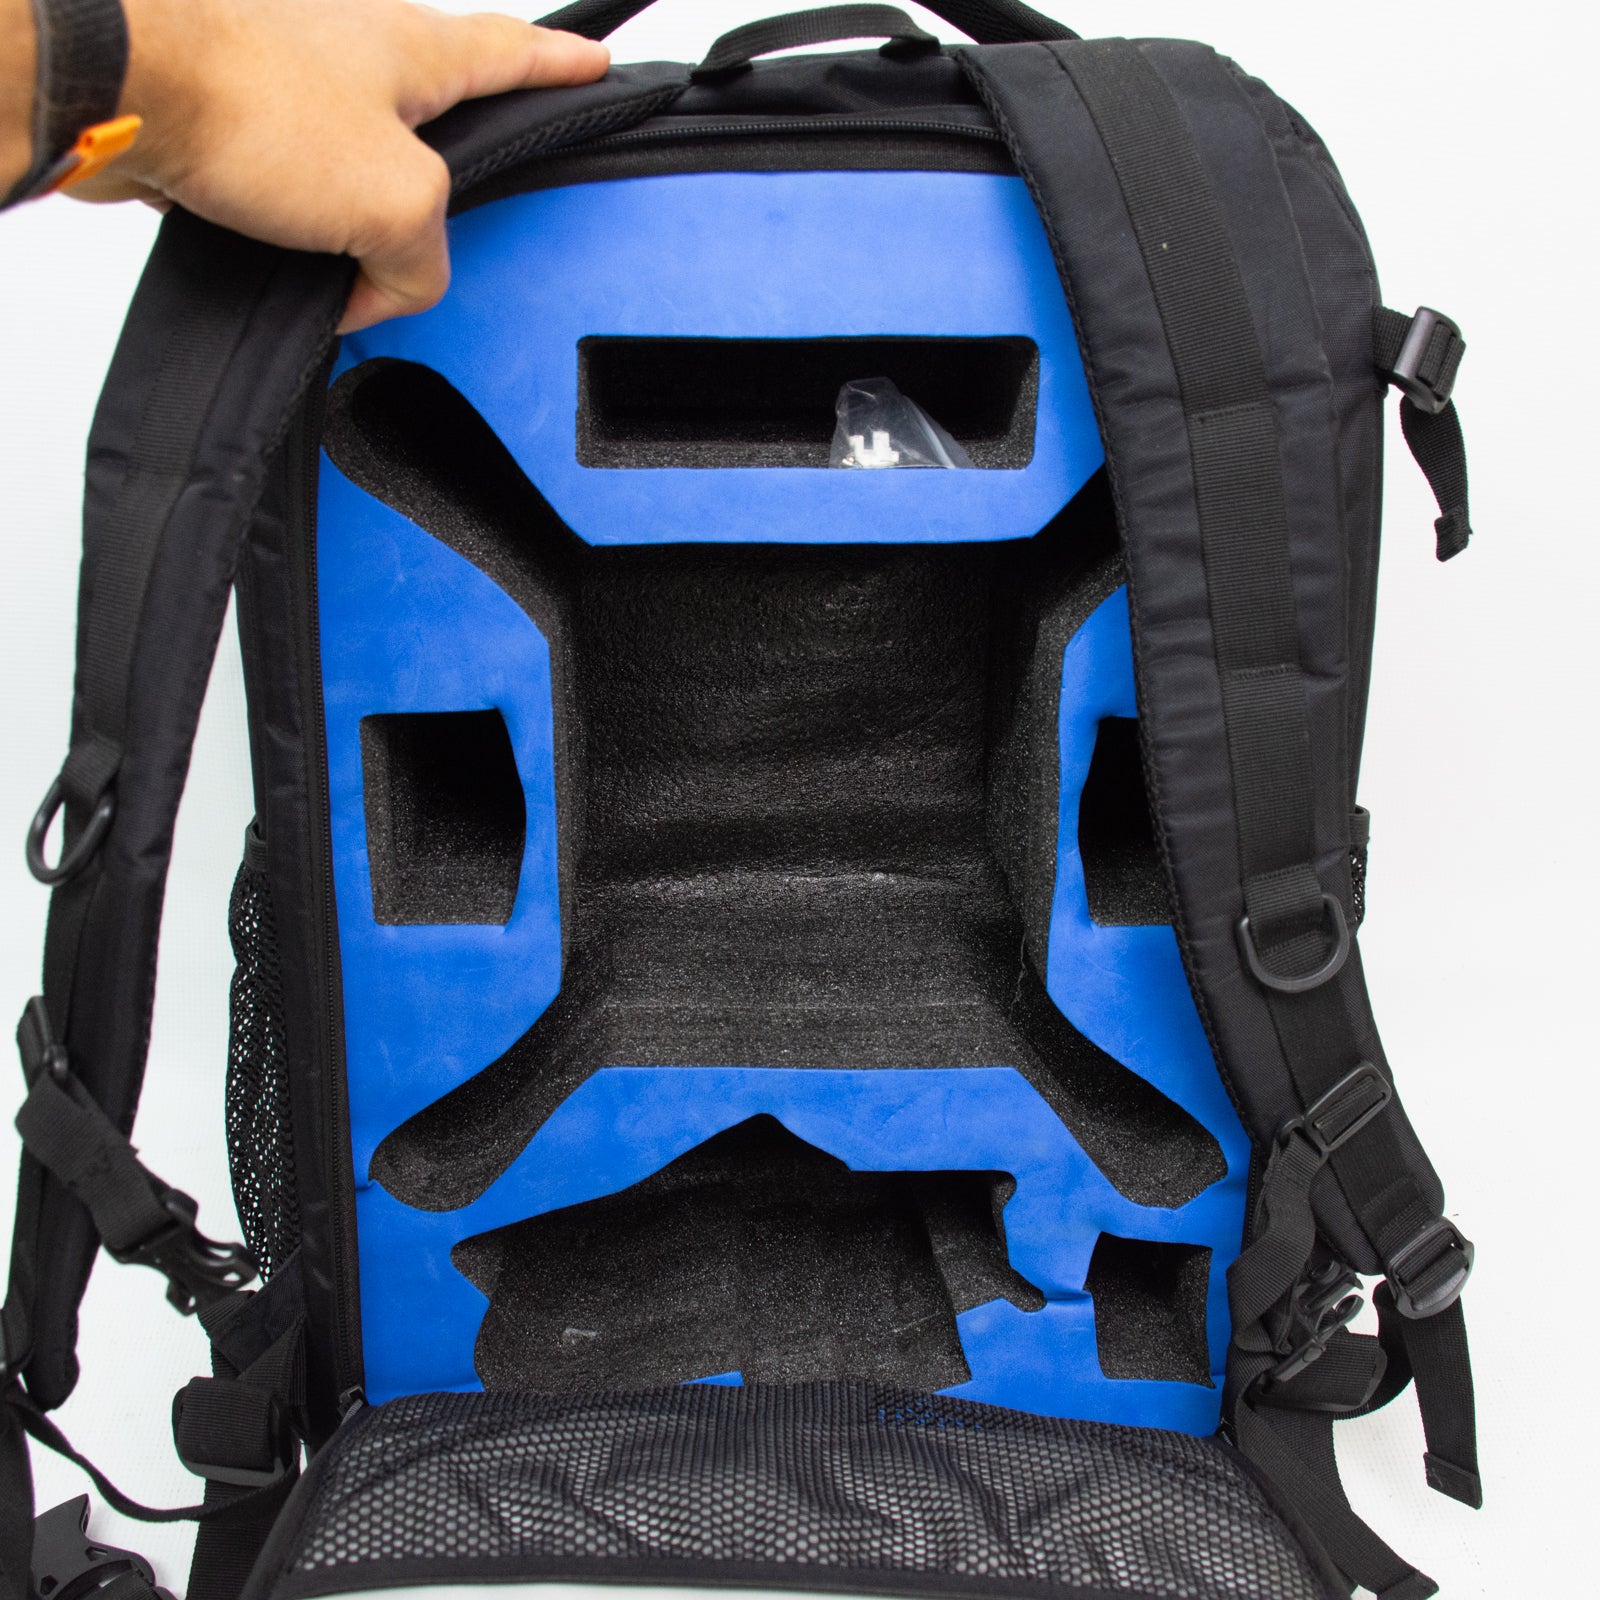 Atomik DJI Drone Backpack